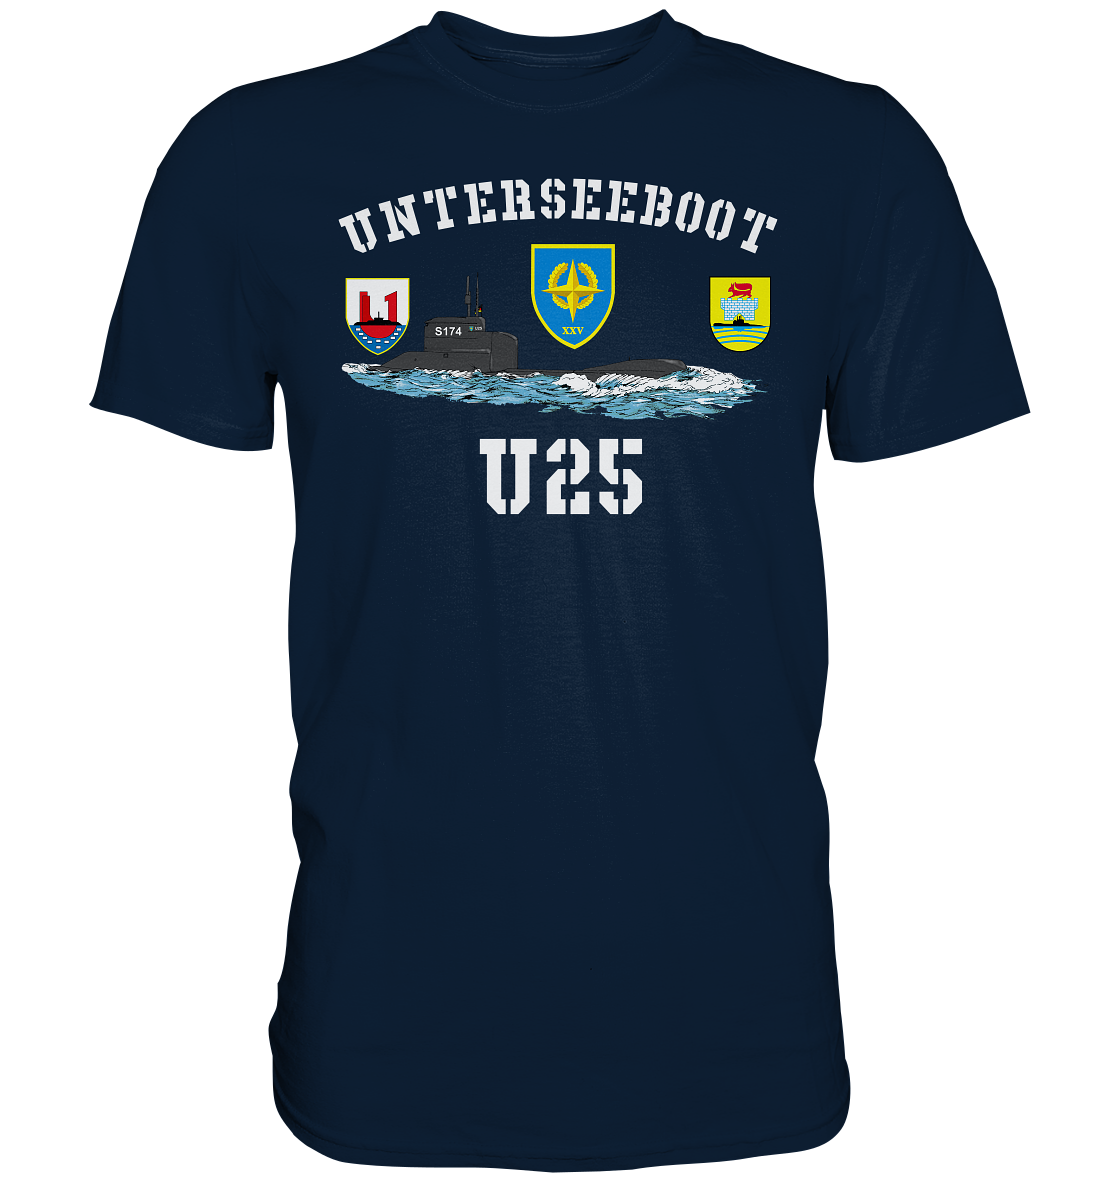 Unterseeboot U25 - Premium Shirt